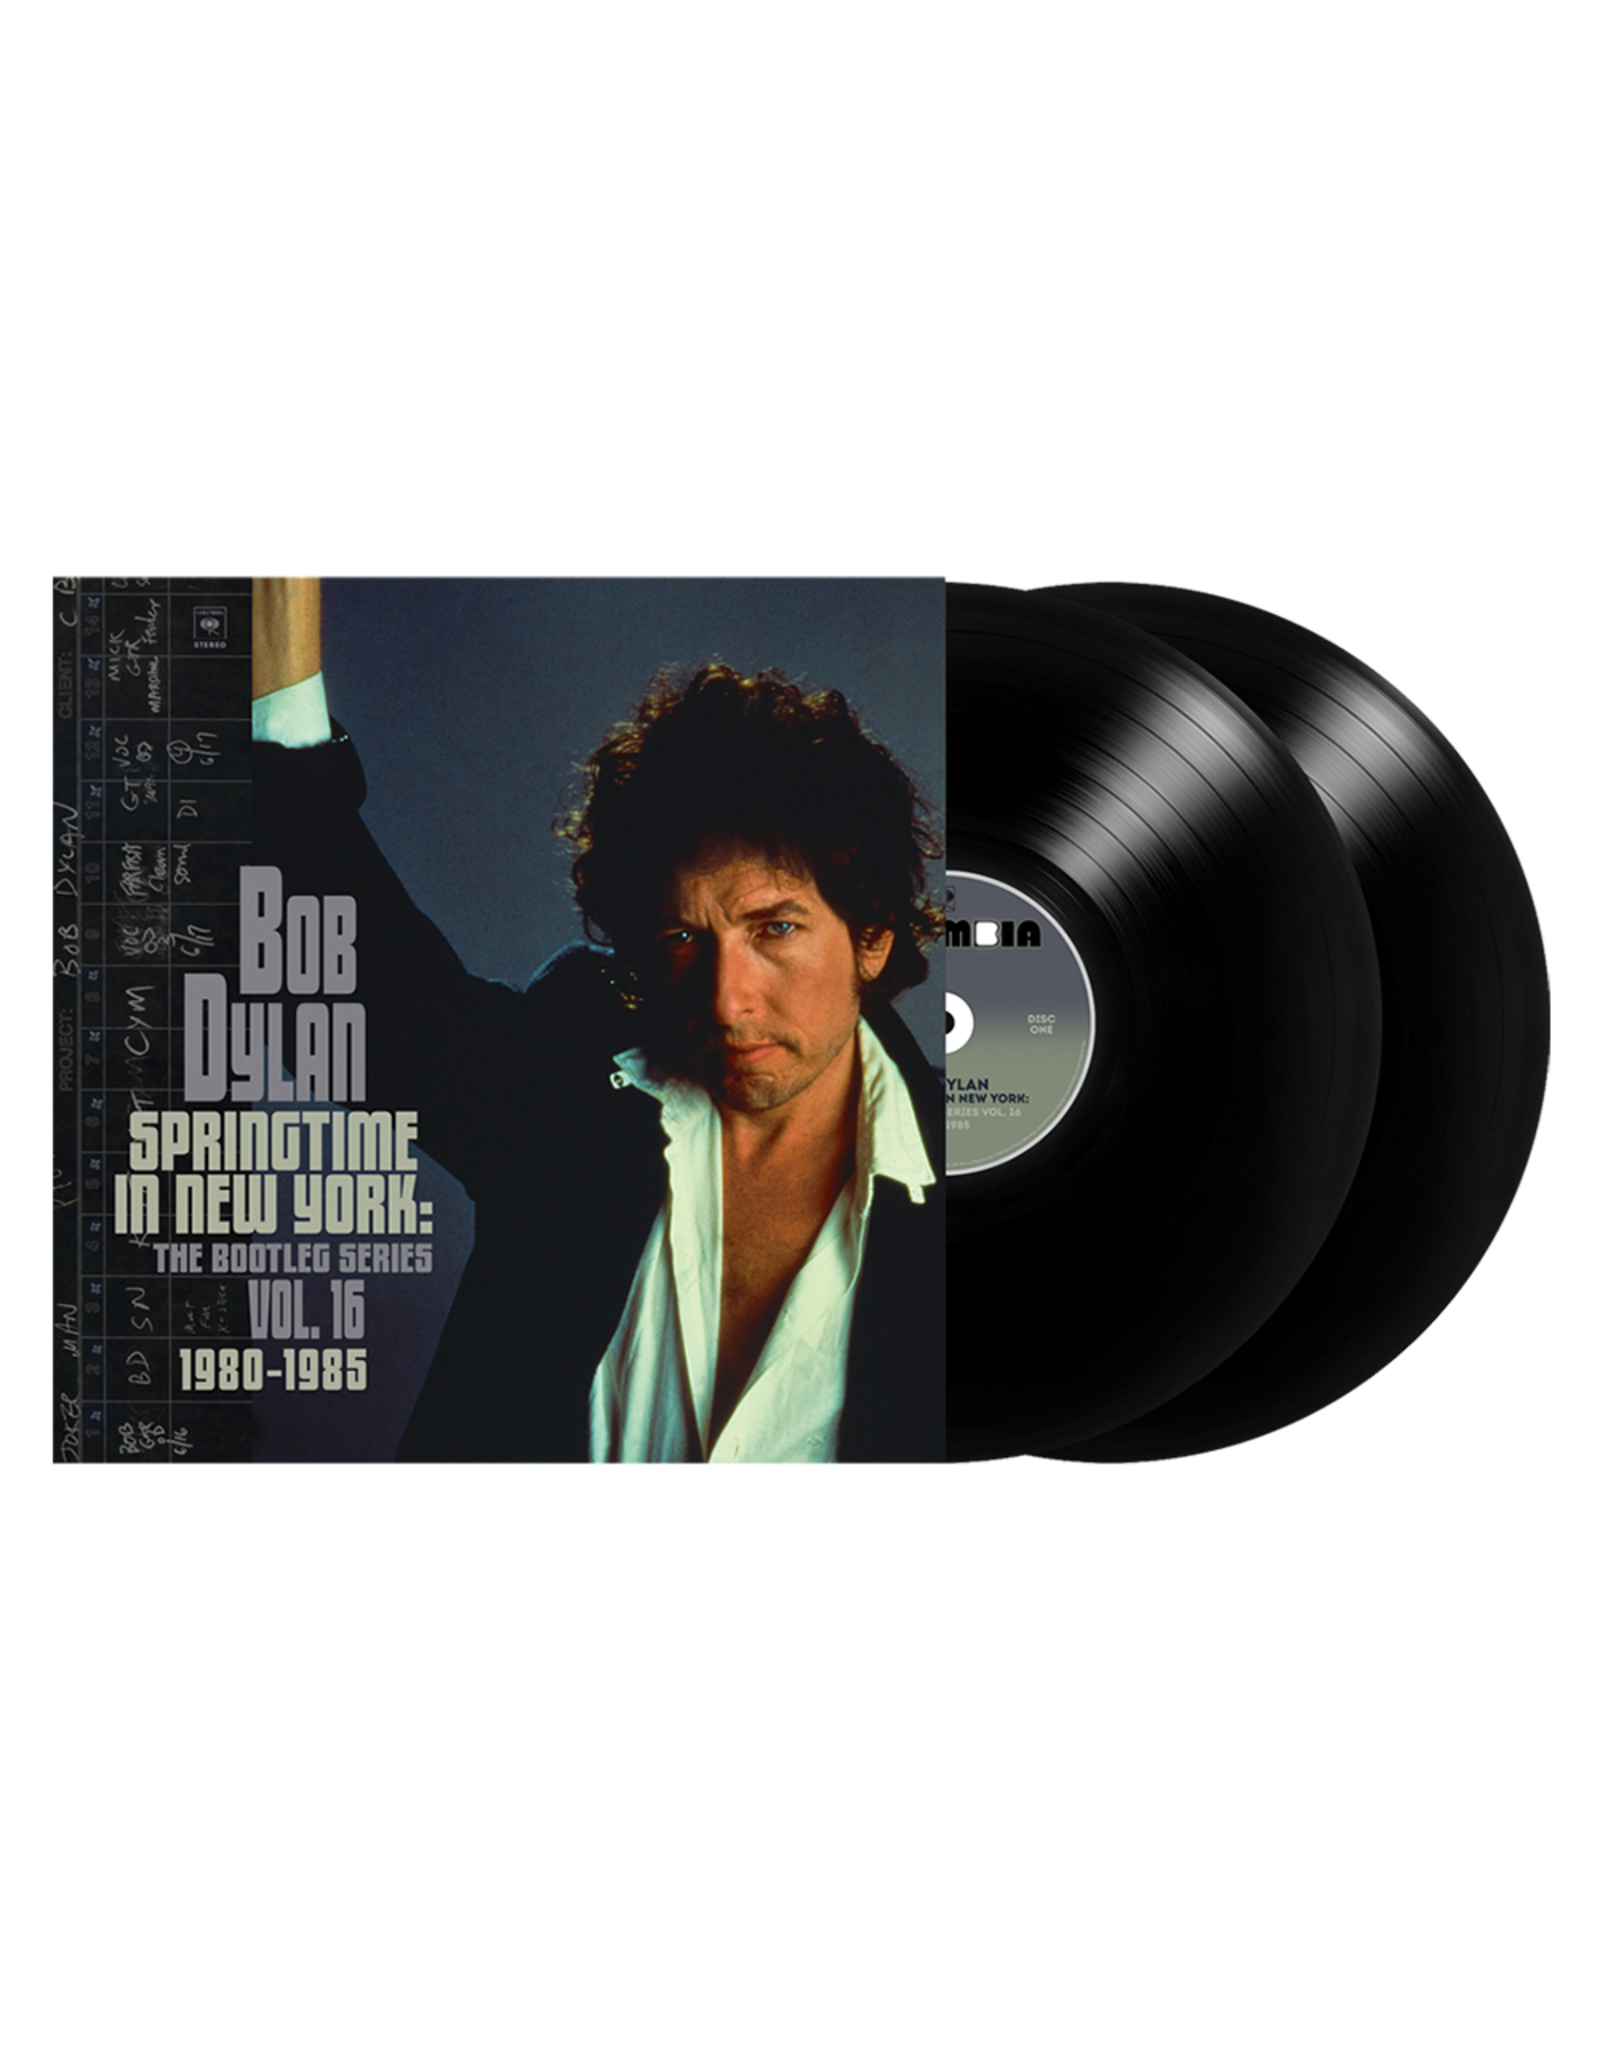 Bob Dylan - Springtime In New York: The Bootleg Series Vol. 16 (1980-1985)